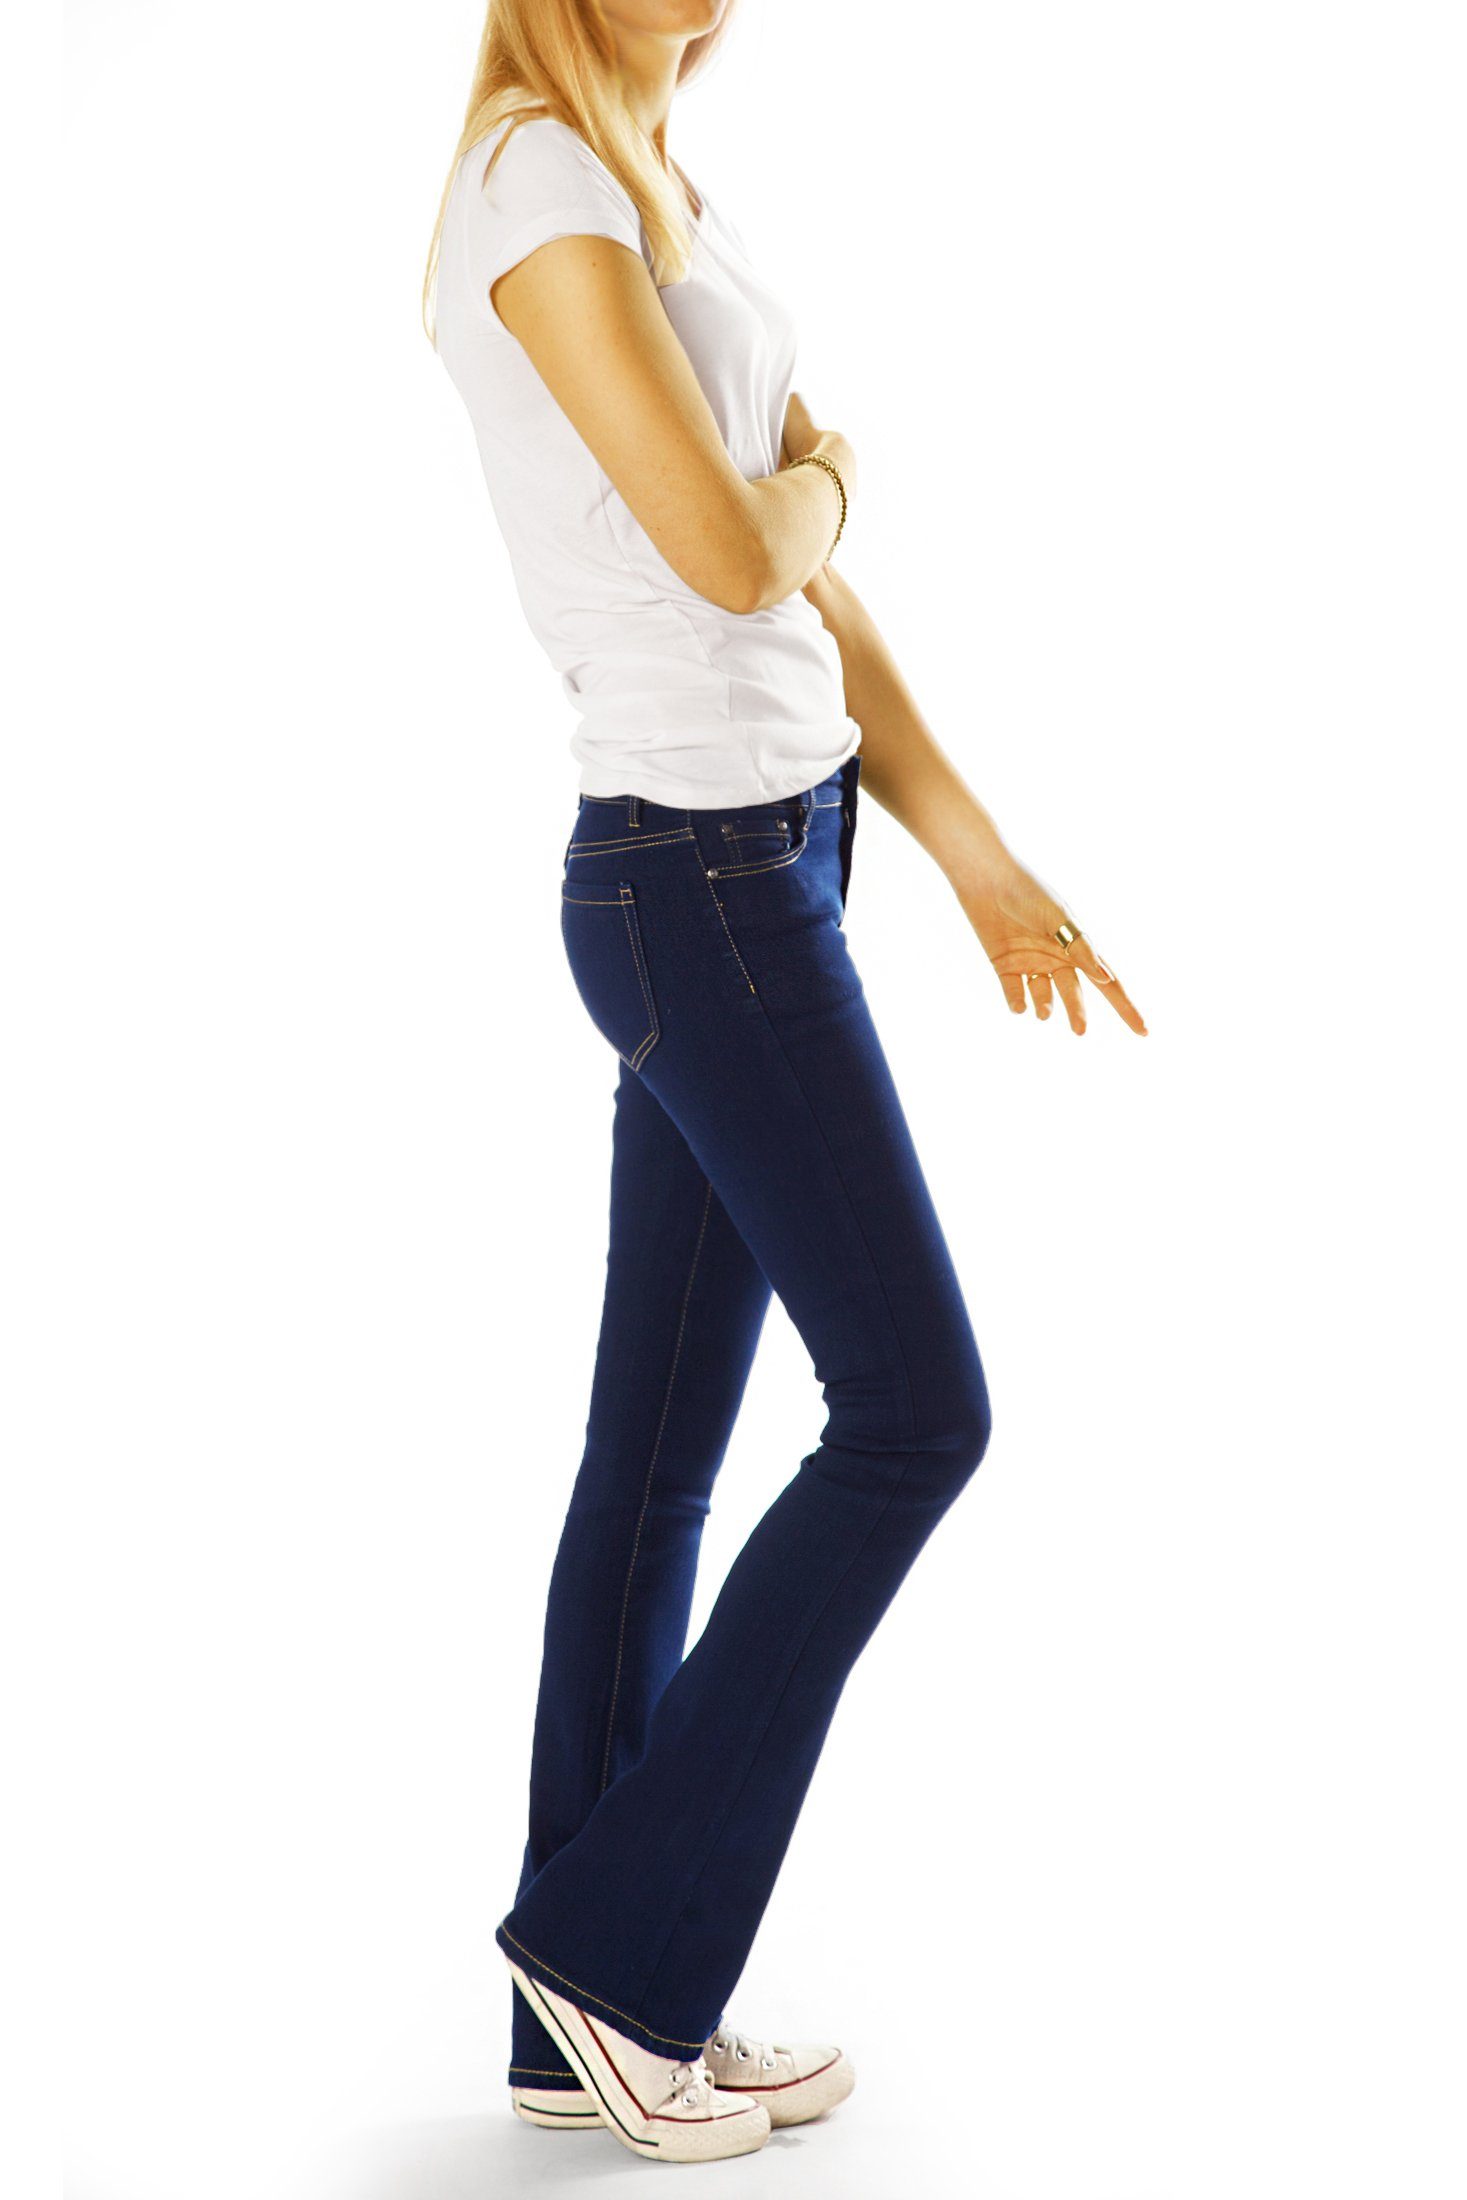 Hüftjeans Damen Stretchjeans Stretch-Anteil, Bootcut 5-Pocket-Style Jeanshose schwarz - be mit Bootcut-Jeans -j18g styled